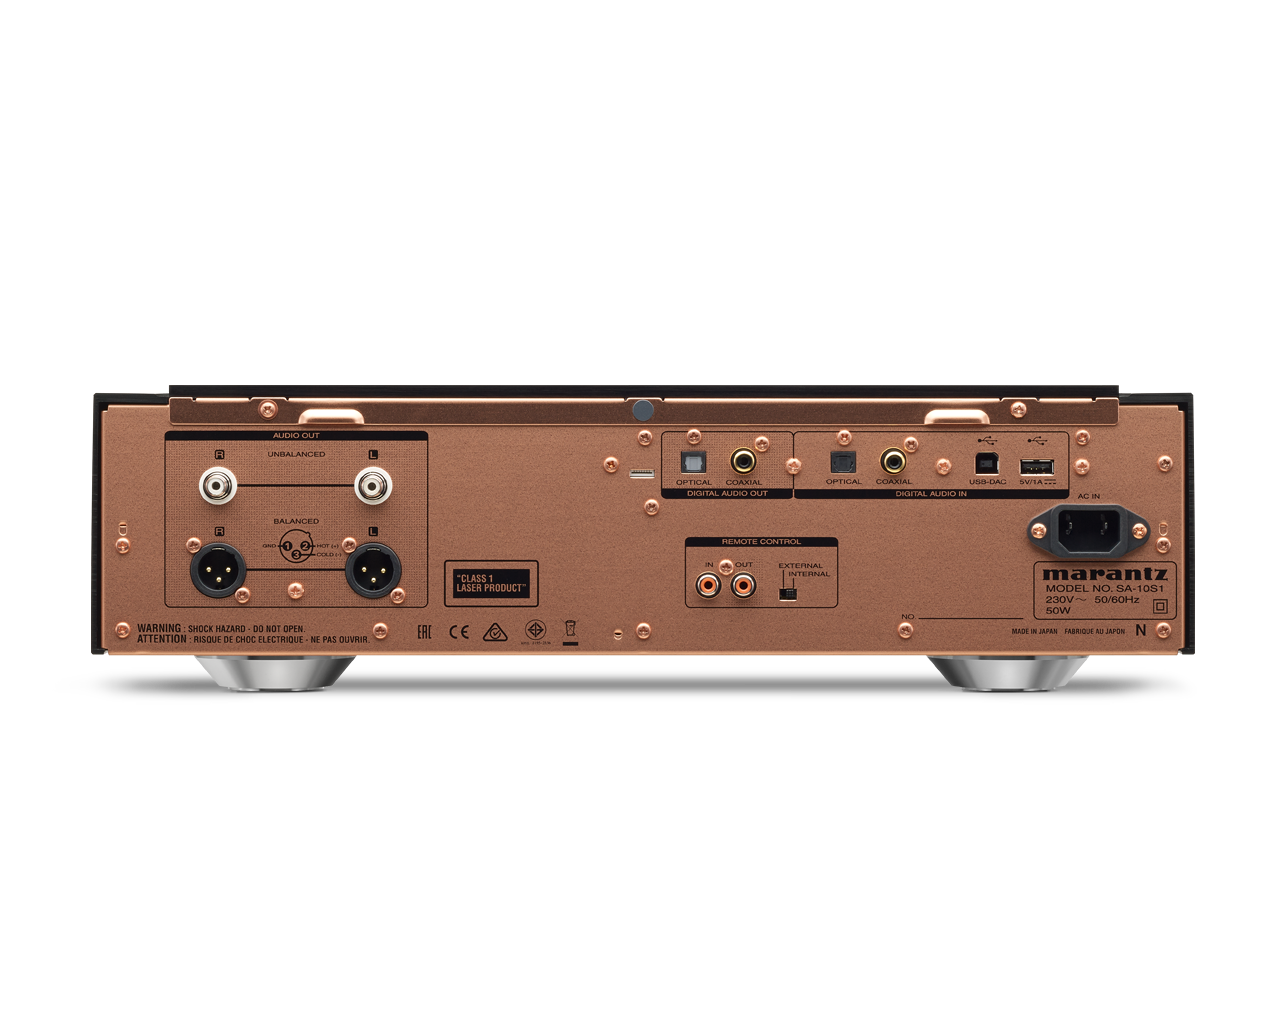 Marantz SA-10 Super Audio CD player with USB DAC and digital inputs - Black